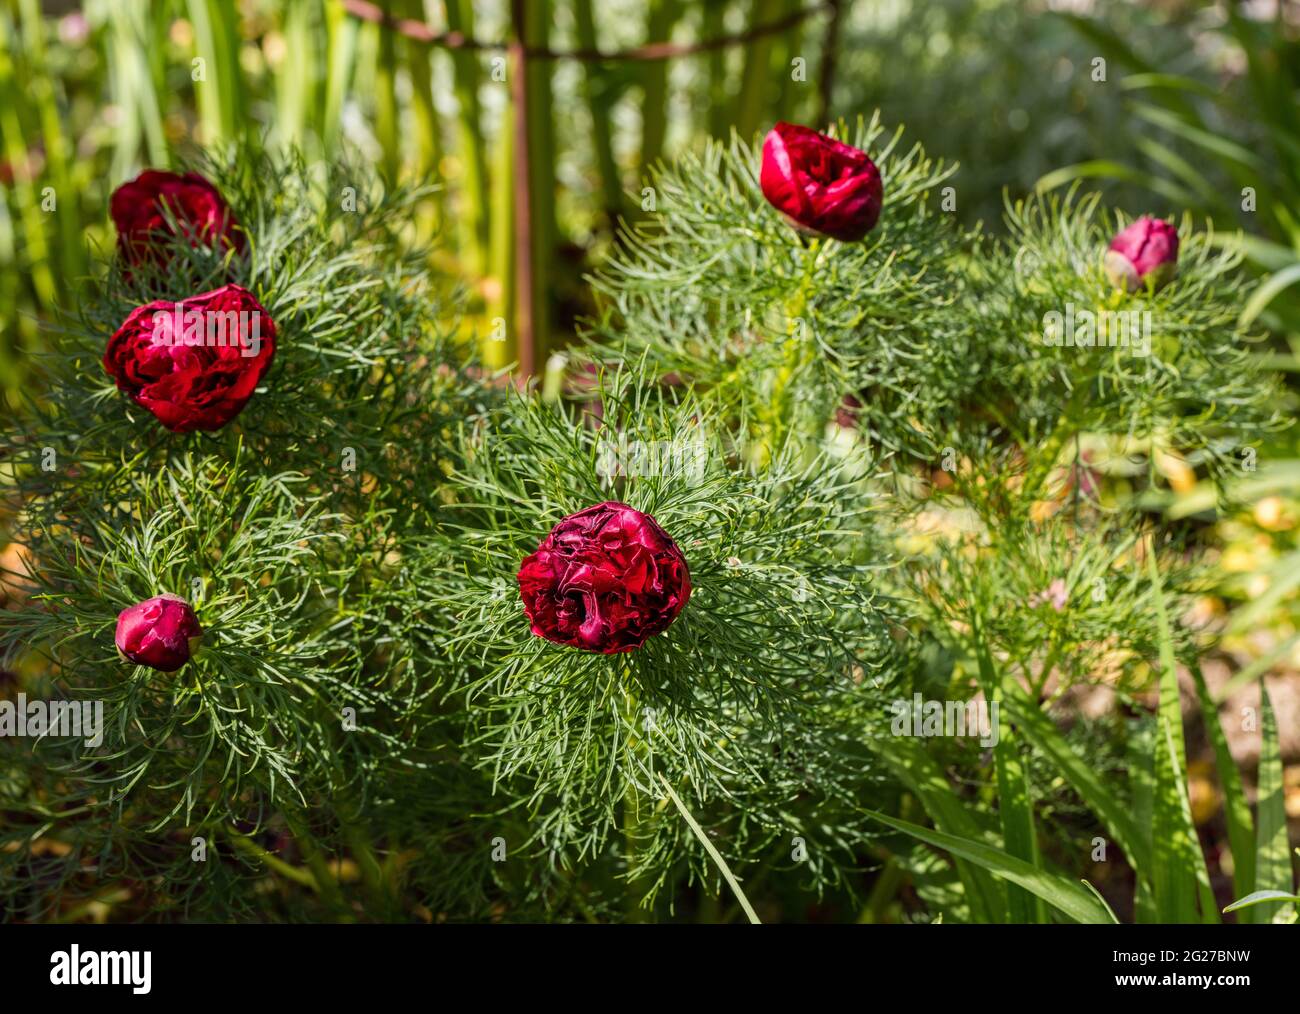 'Plena, Rubra Plena' Fernleaf Peony, Dillpion (Paeonia tenuifolia) Stock Photo